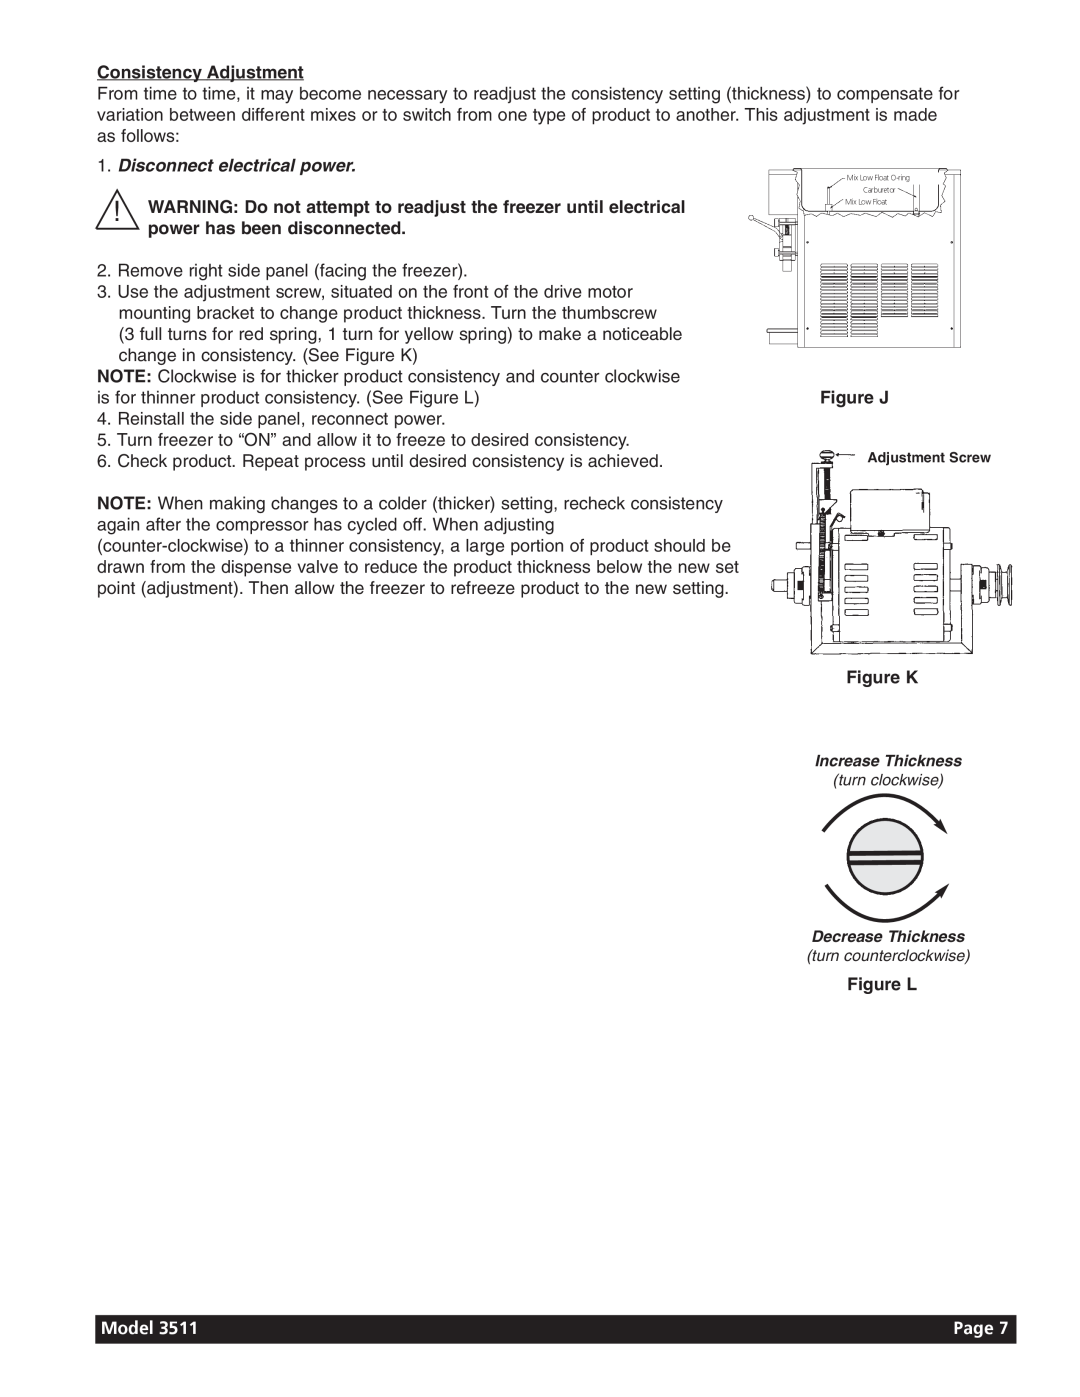 Grindmaster 3511 manual Consistency Adjustment, Disconnect electrical power, Figure J, Figure K, Figure L, Model, Page 